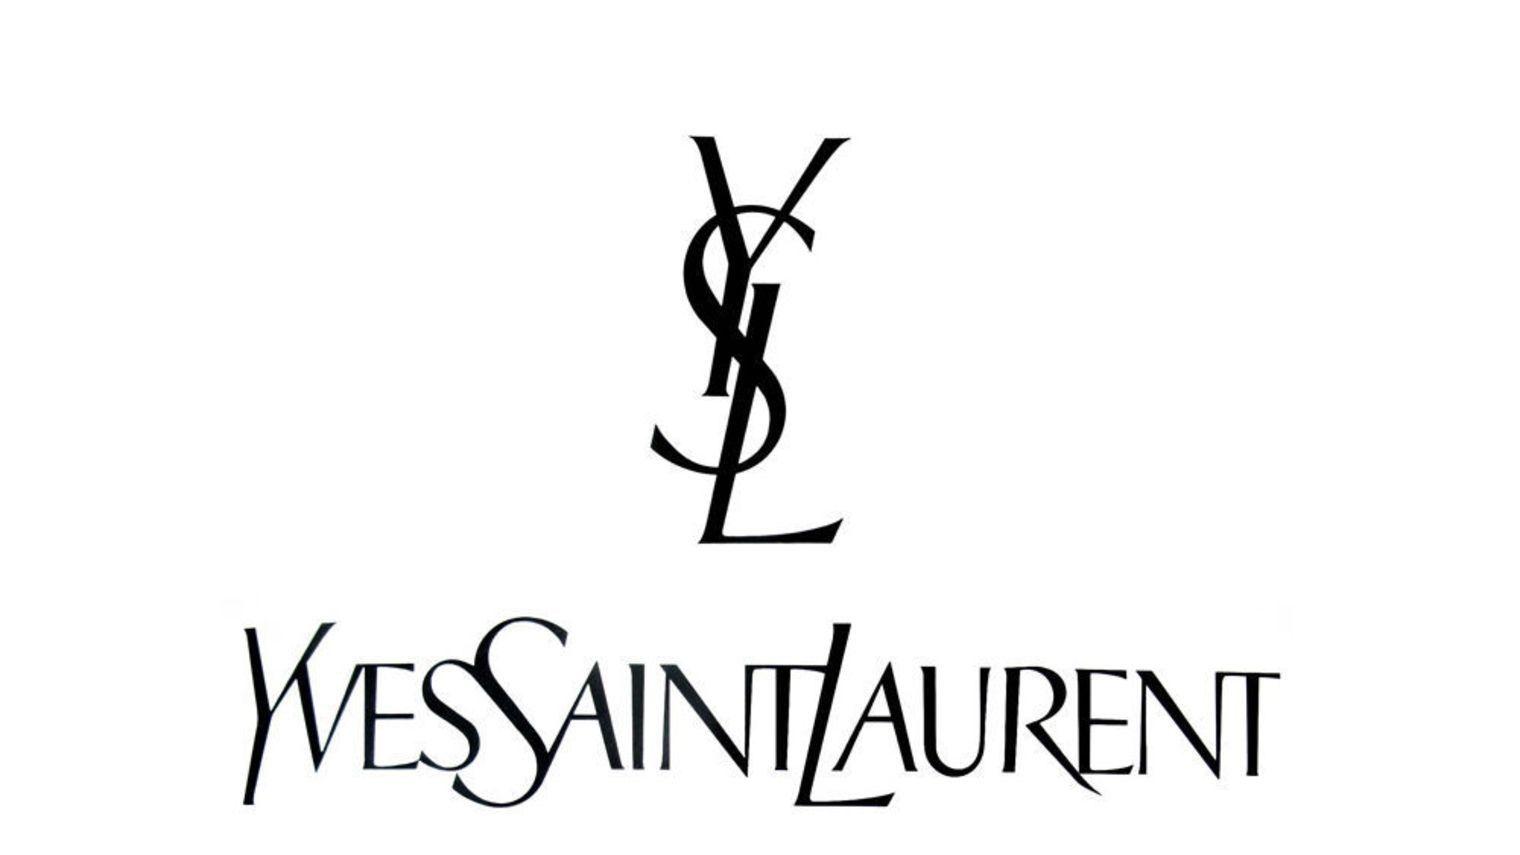 Logo Louis Vuitton - Louis Vuitton Ysl Logo Clipart (3484x1258), Png  Download